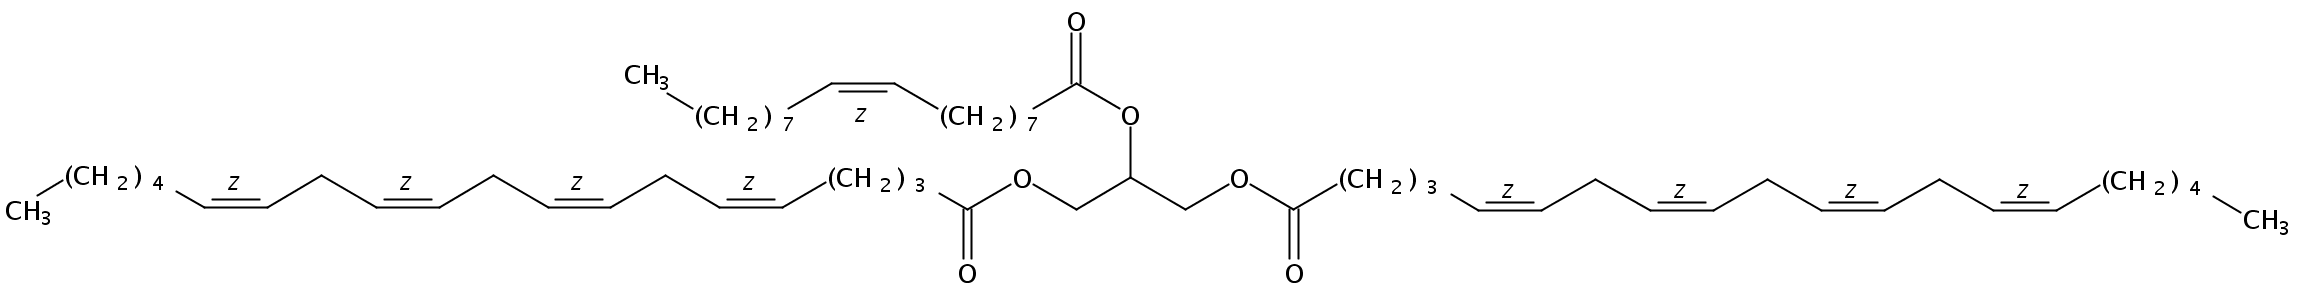 Structural formula of 1,3-Arachidonin-2-Olein